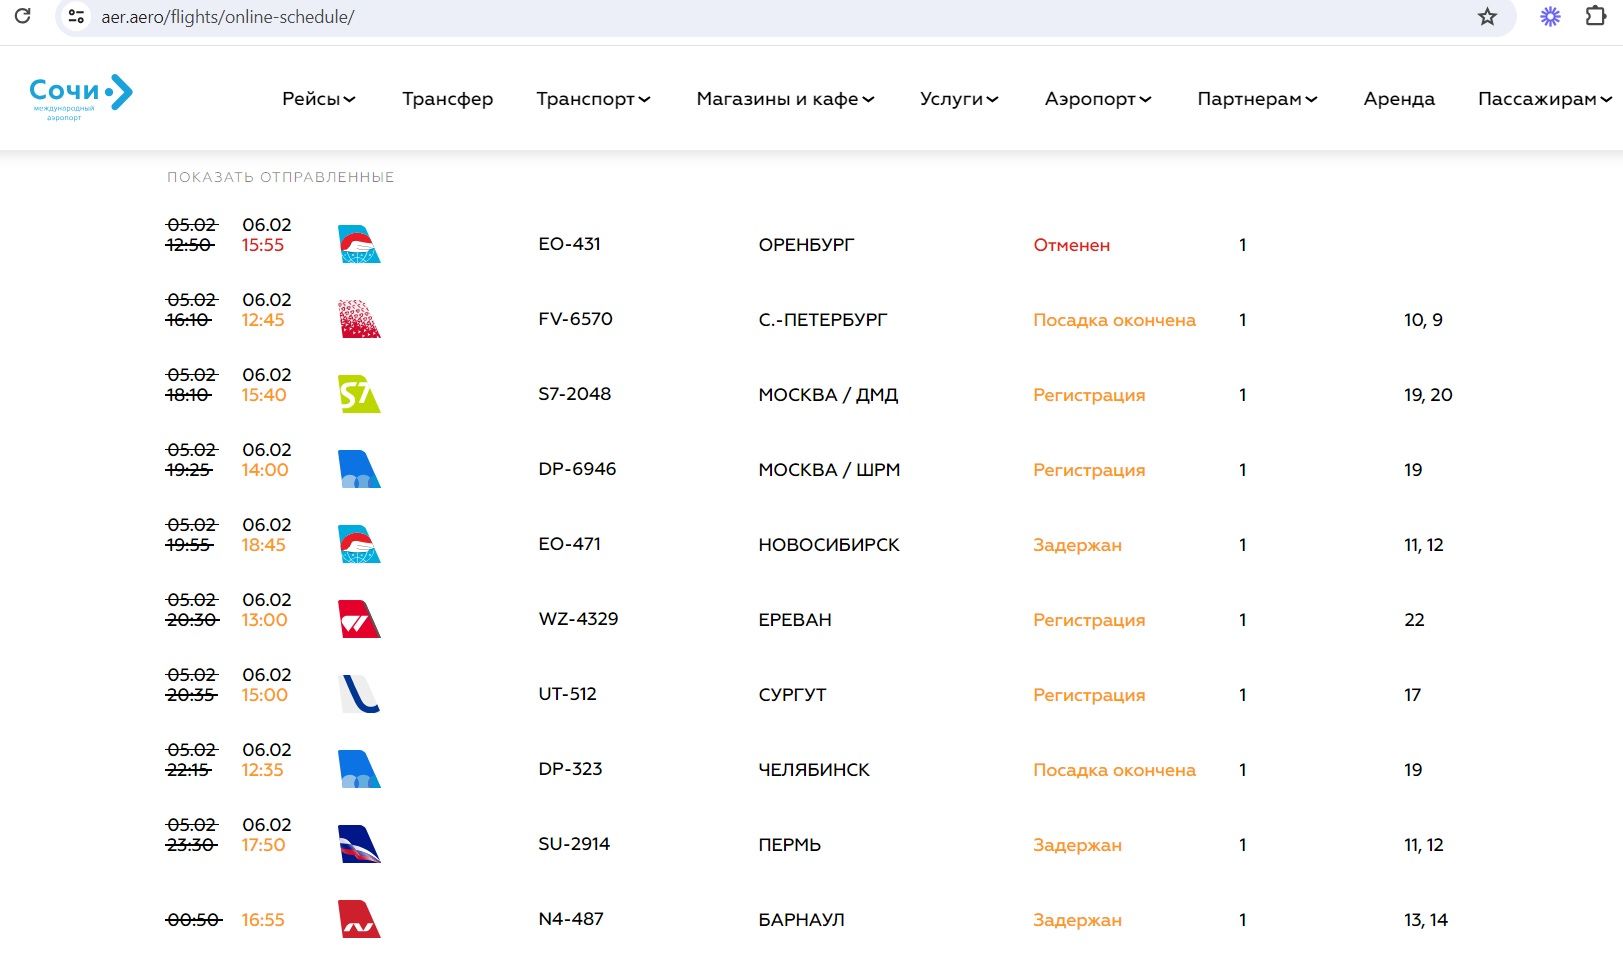  © Скриншот страницы сайта https://aer.aero/flights/online-schedule/